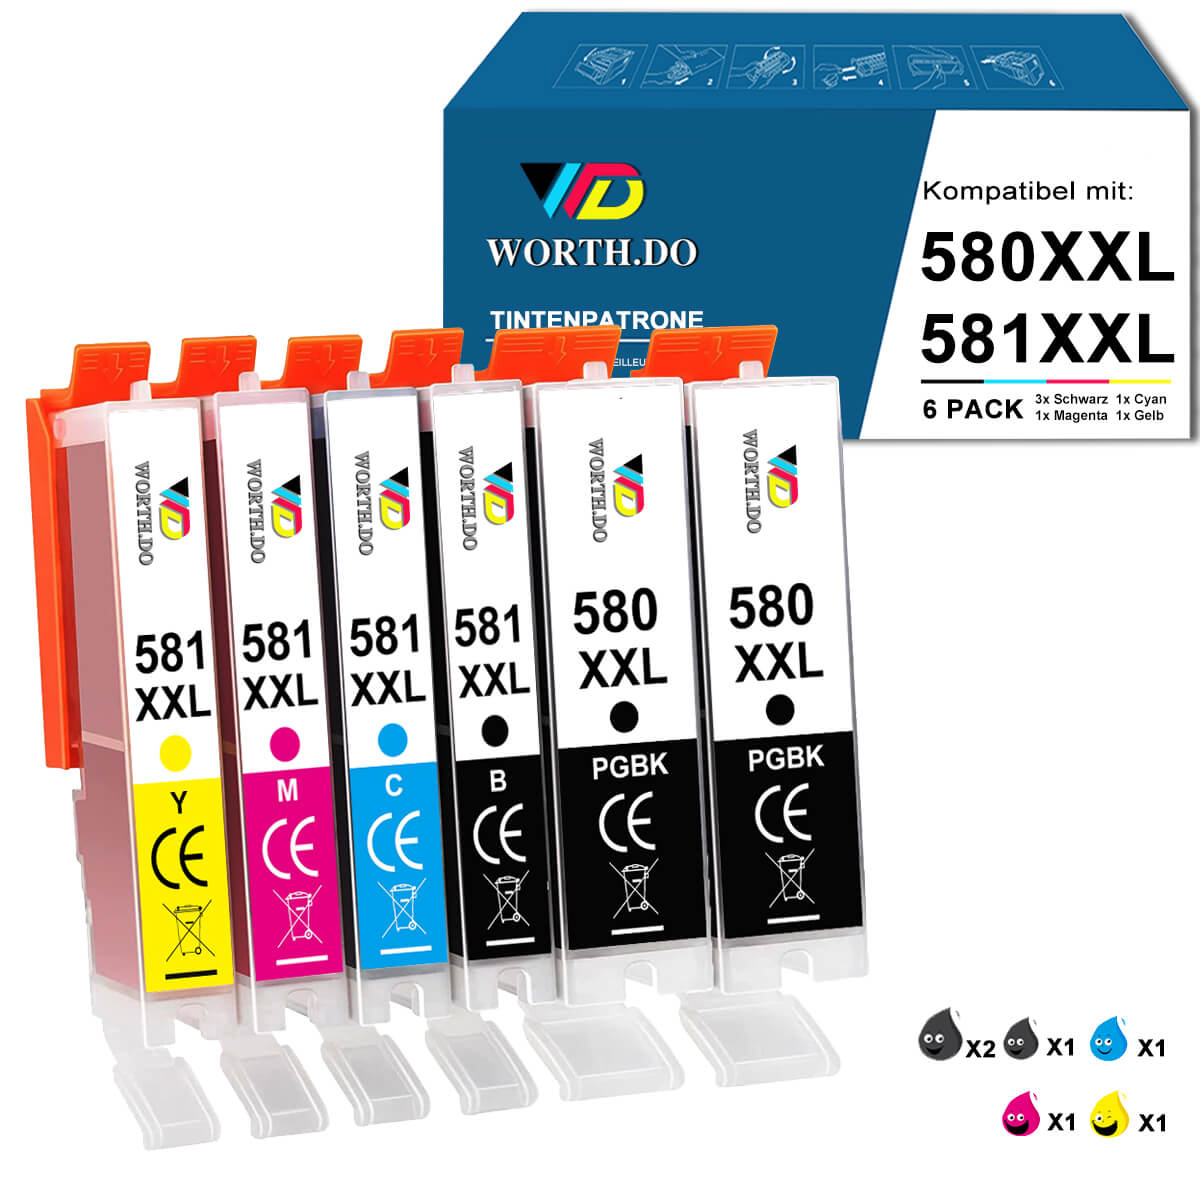    worthdo-kompatible-tintenpatronen-fuer-canon-pgi-580xl-cli-581xl-6pack